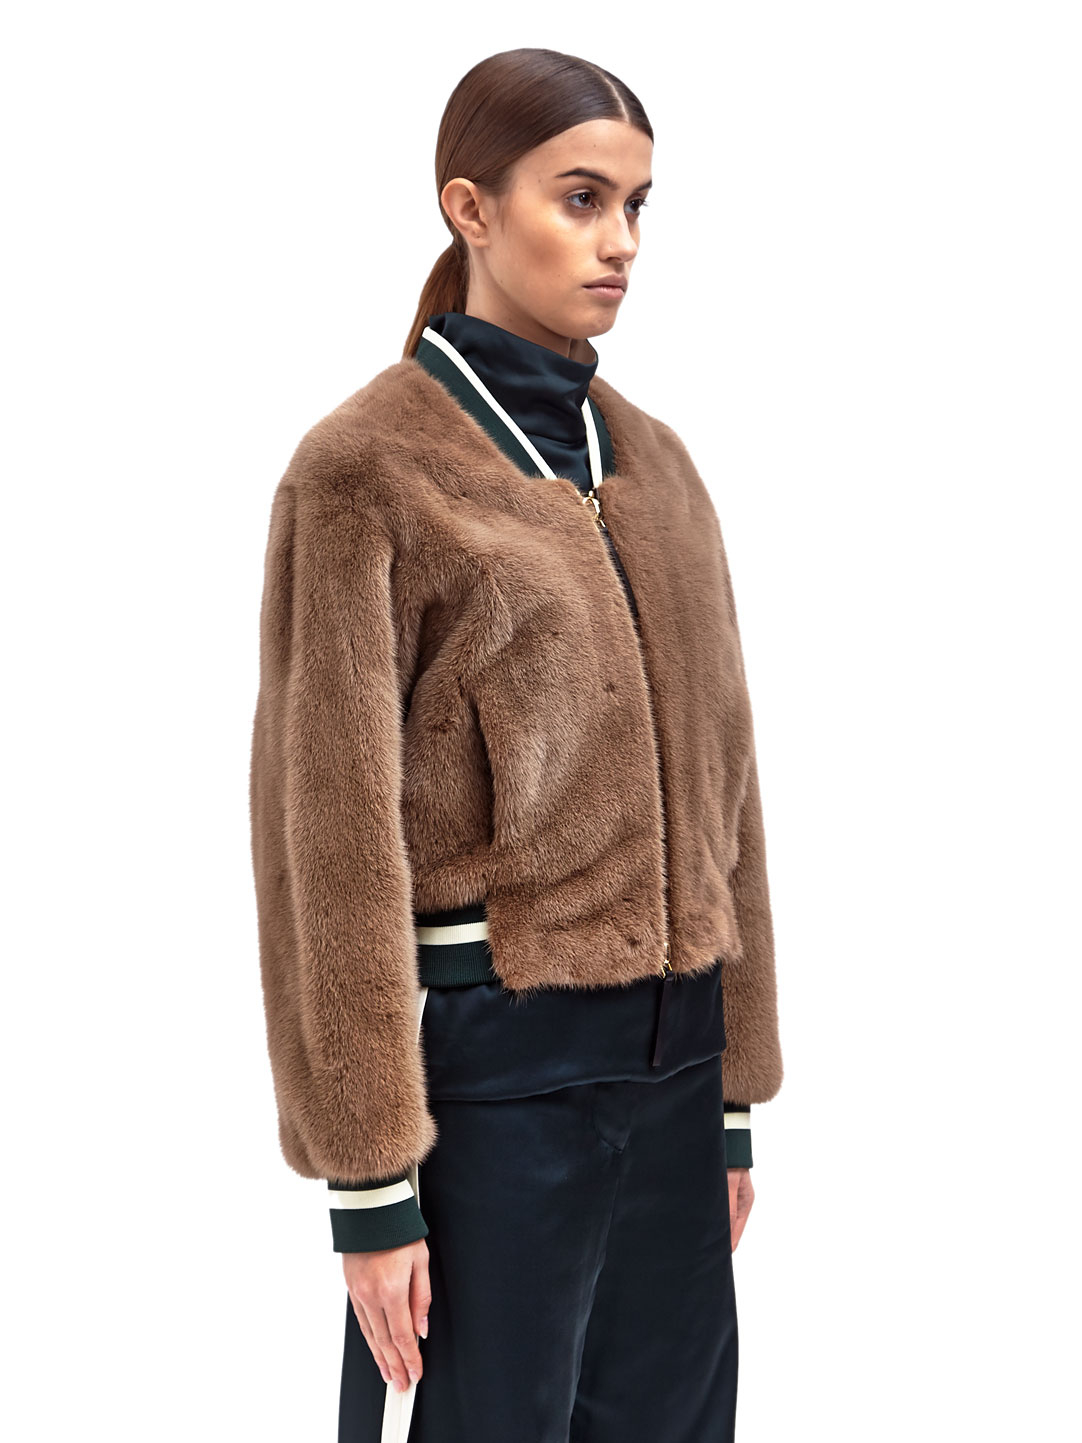 Fur bomber jacket womens – Modern fashion jacket photo blog